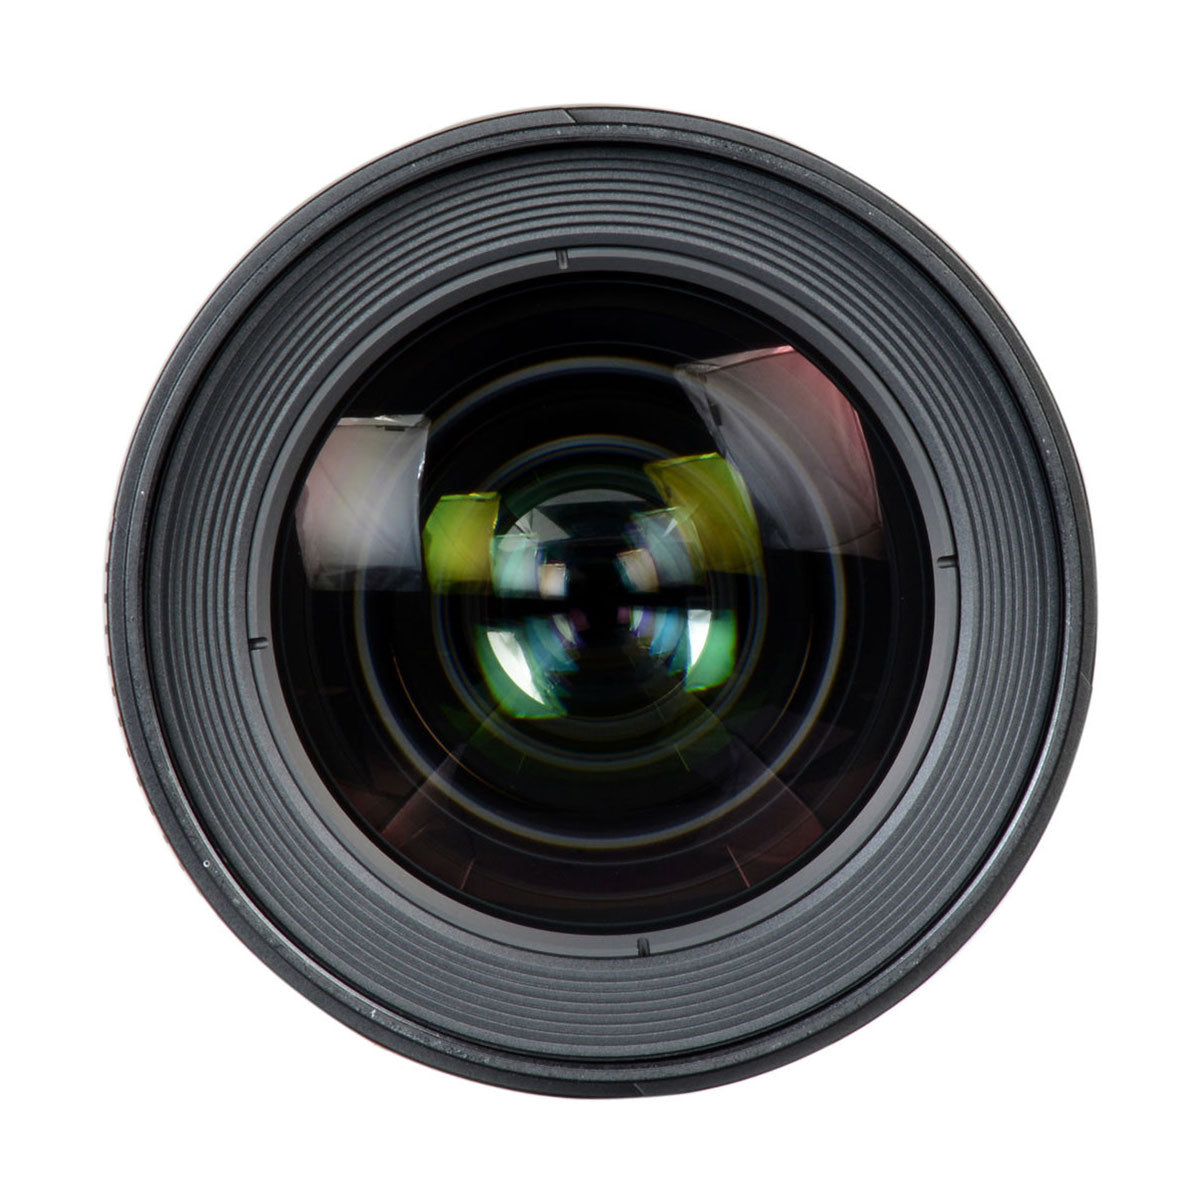 Nikon 28mm f/1.4E AF-S Lens *OPEN BOX*